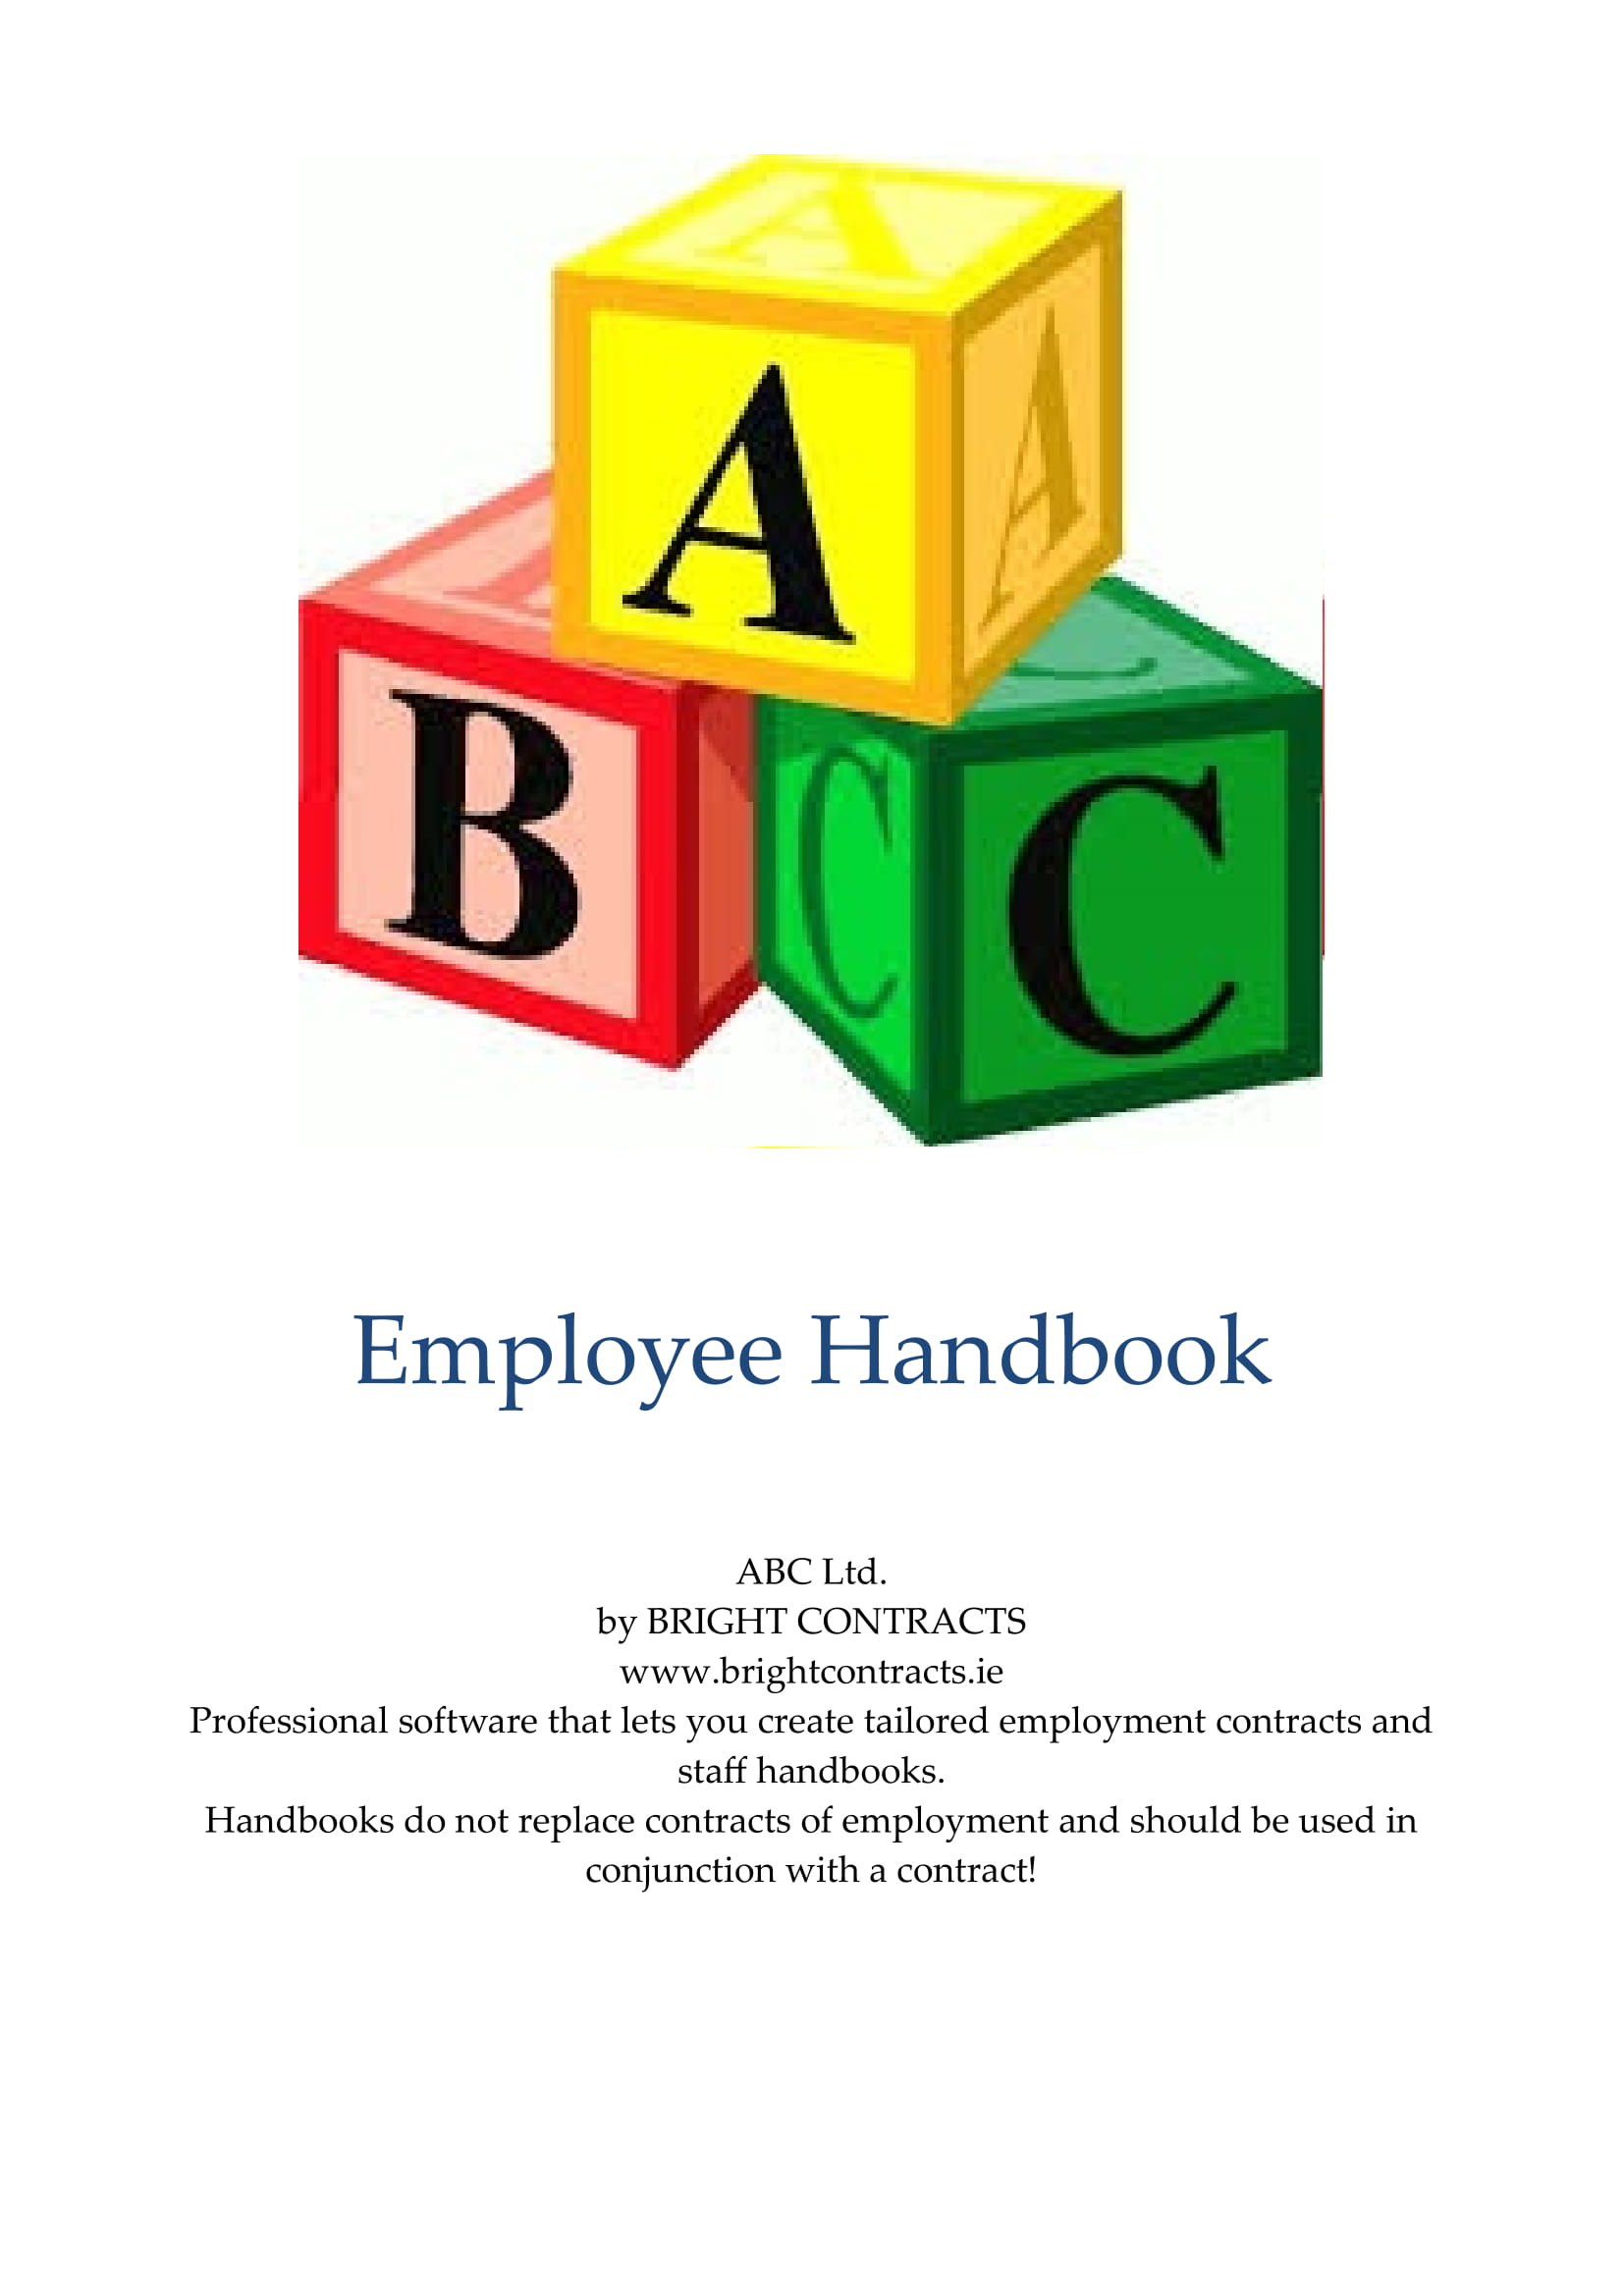 walmart employee handbook pdf